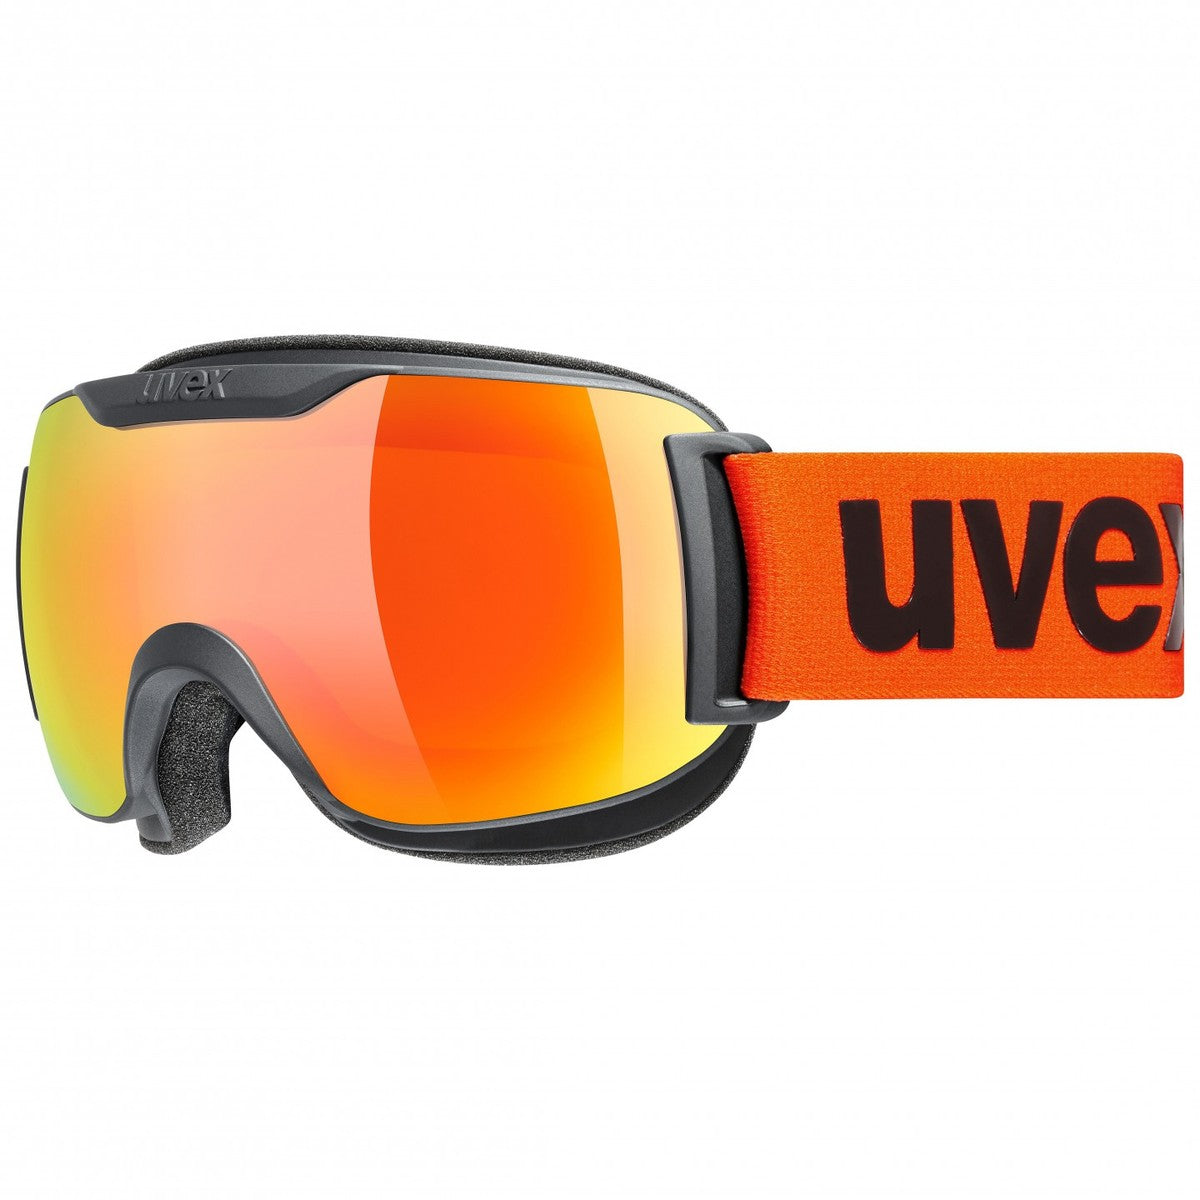 Uvex Downhill 2000 S CV S2 skibril